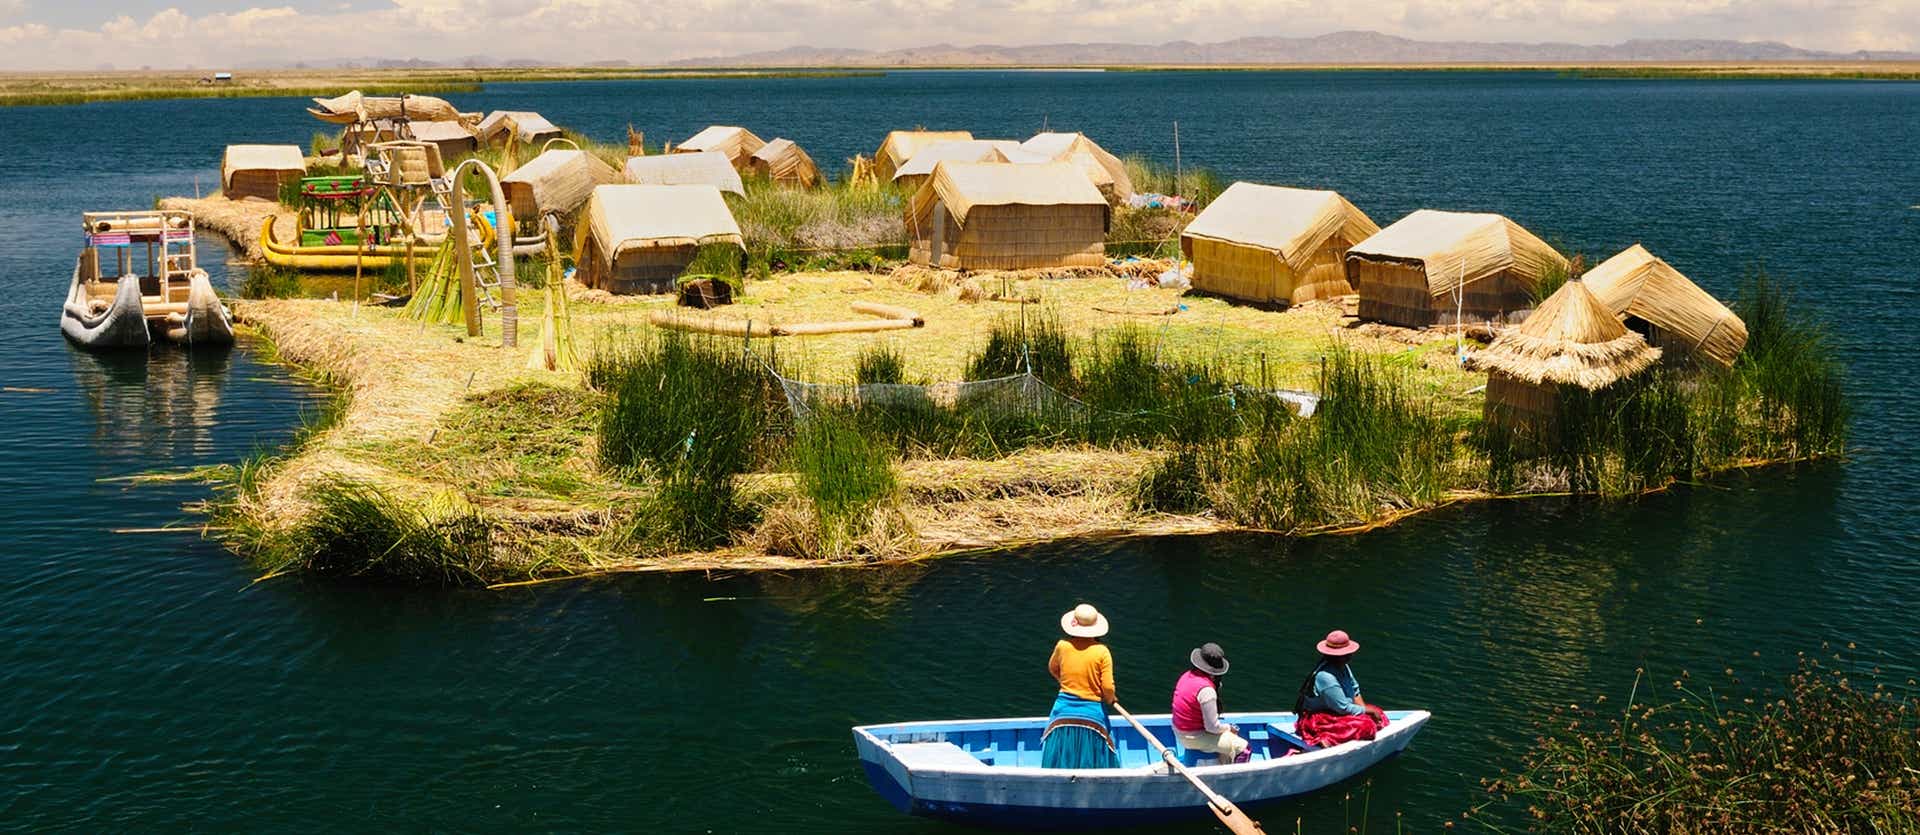 Uros Floating Islands <span class="iconos separador"></span> Lake Titicaca <span class="iconos separador"></span> Peru